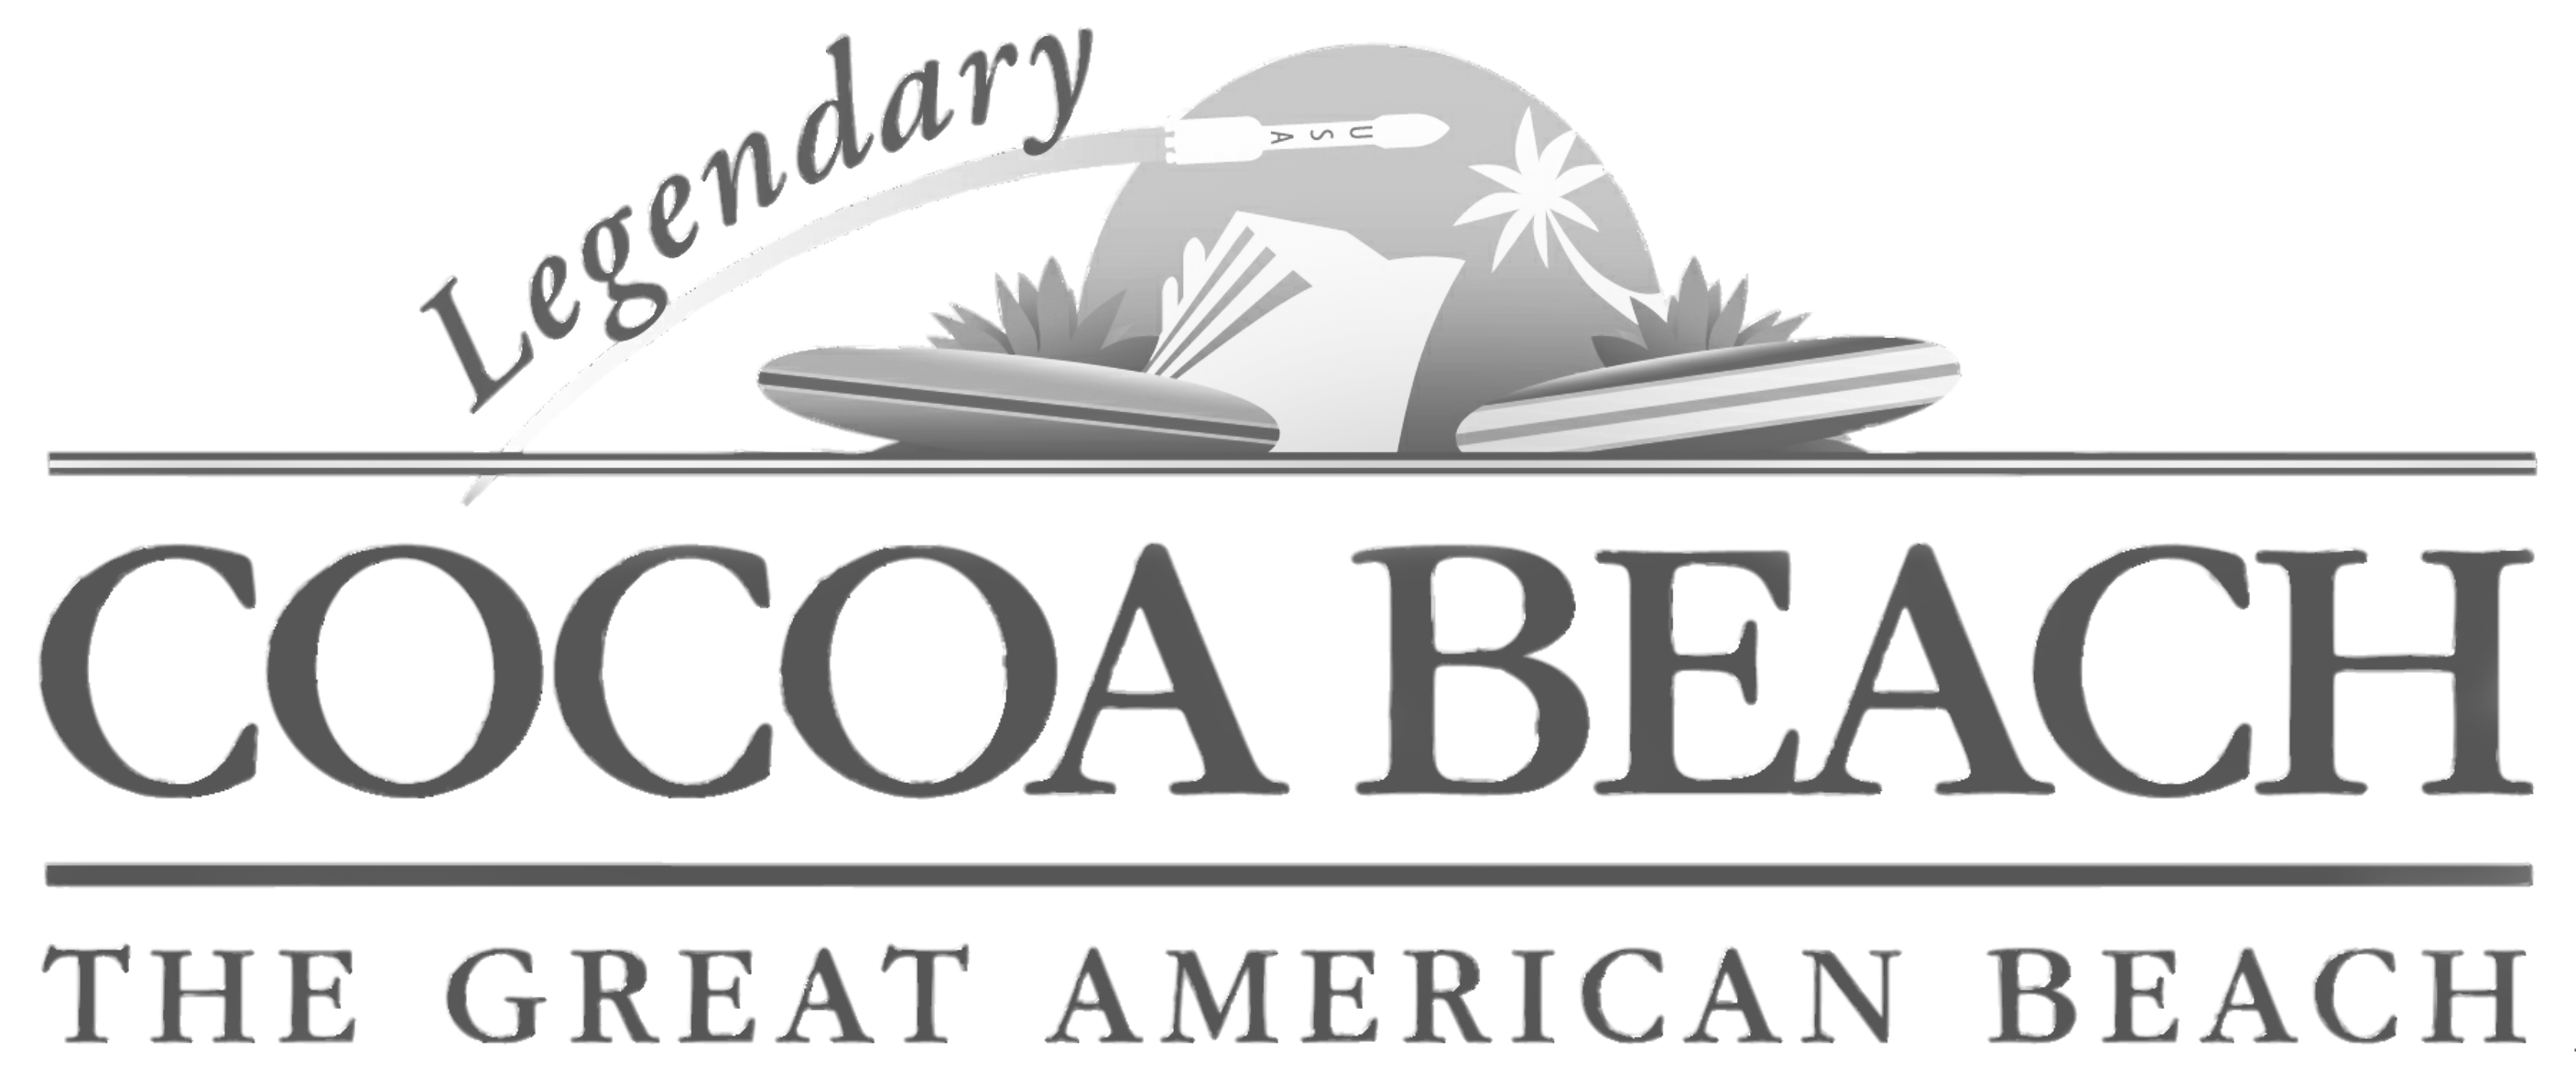 Legendary Cocoa Beach Logo